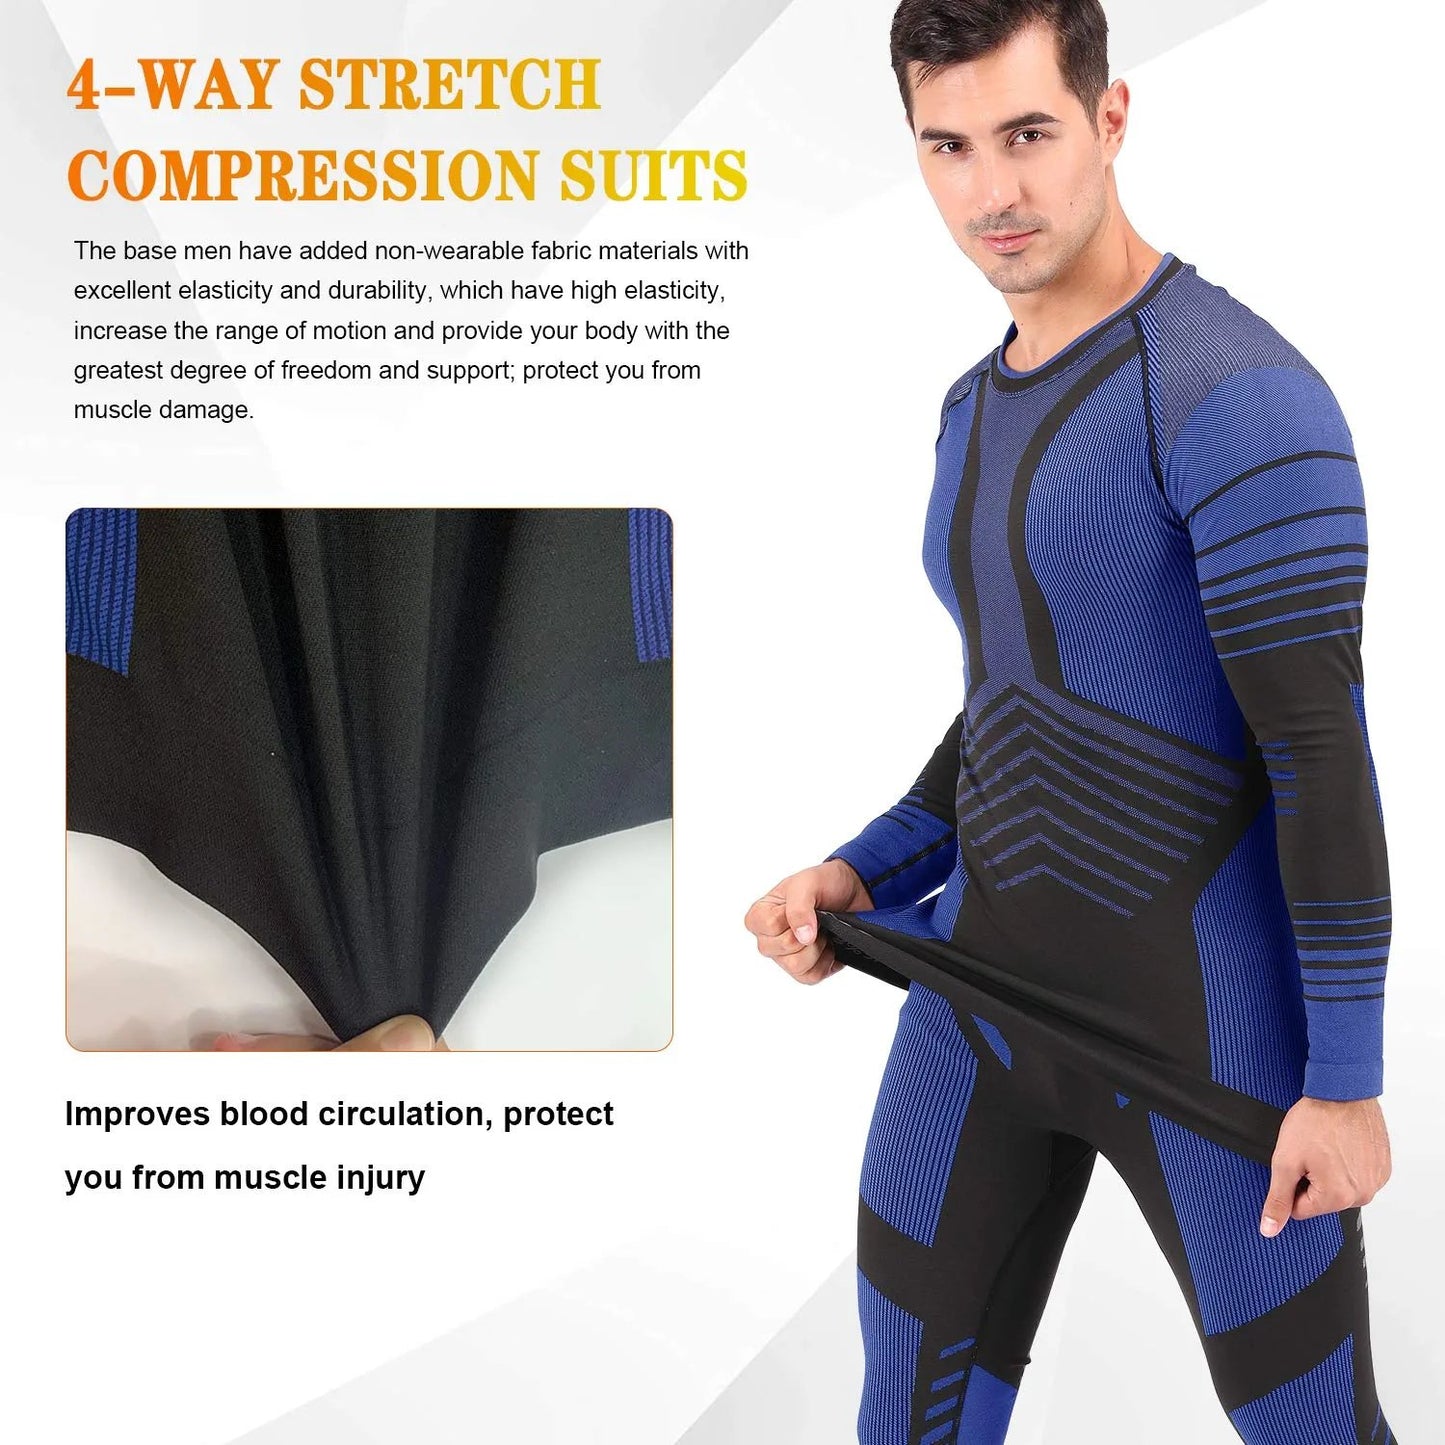 Men's Thermal Underwear Set Winter Gear Men Base Layer Long Johns Bottom